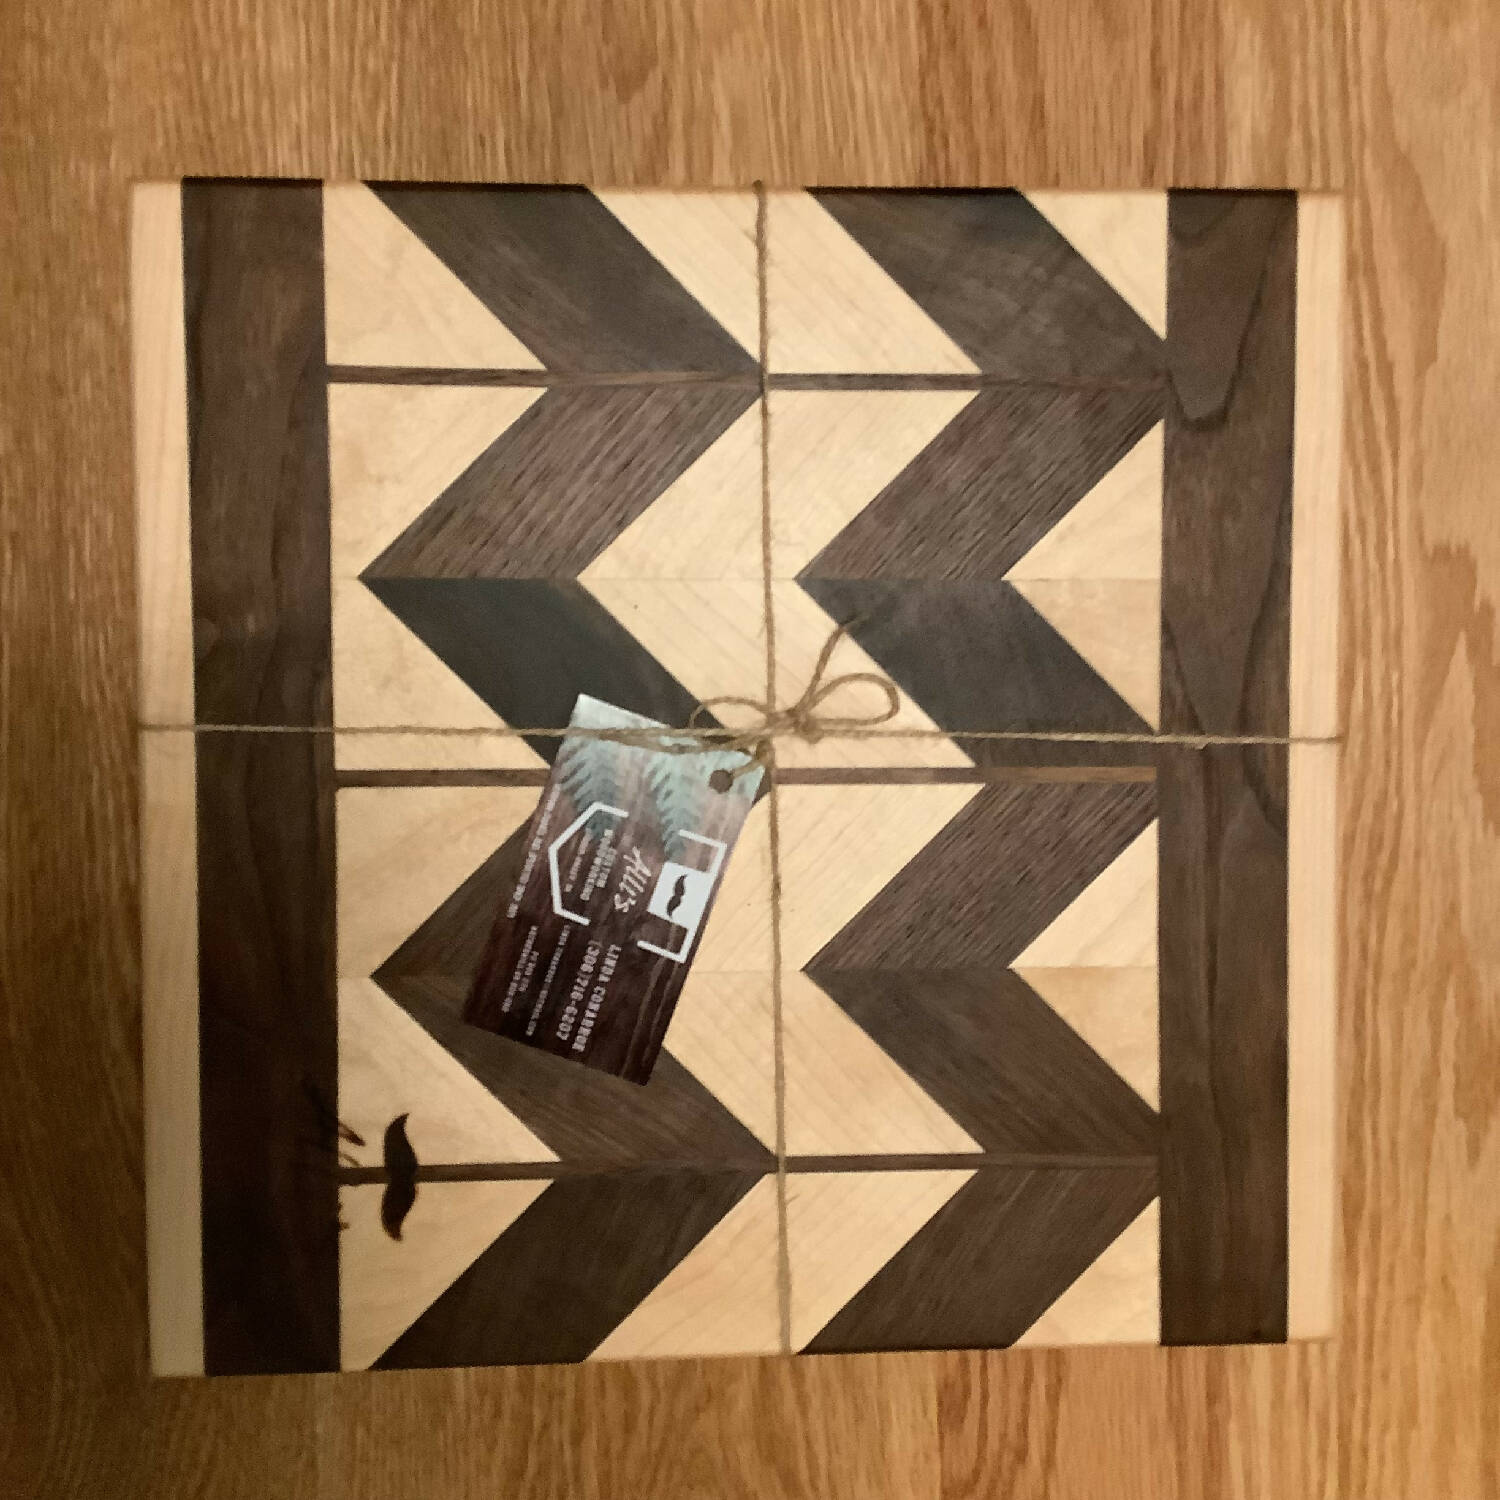 12”x12” chevron pattern maple and walnut cutting board